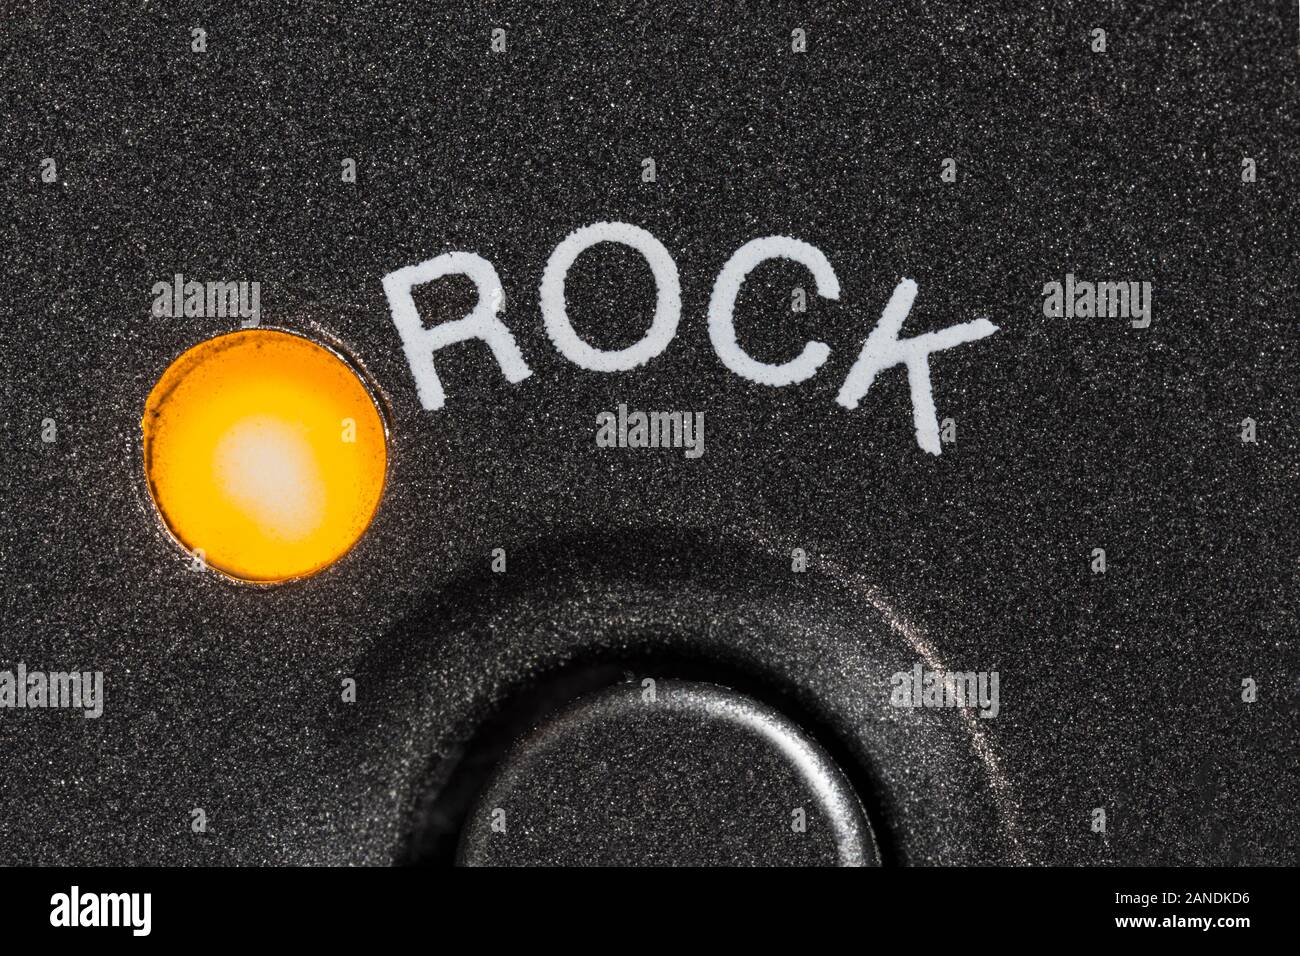 Macro close up photograph of vintage tape machine rock preset button and indicator light. Stock Photo